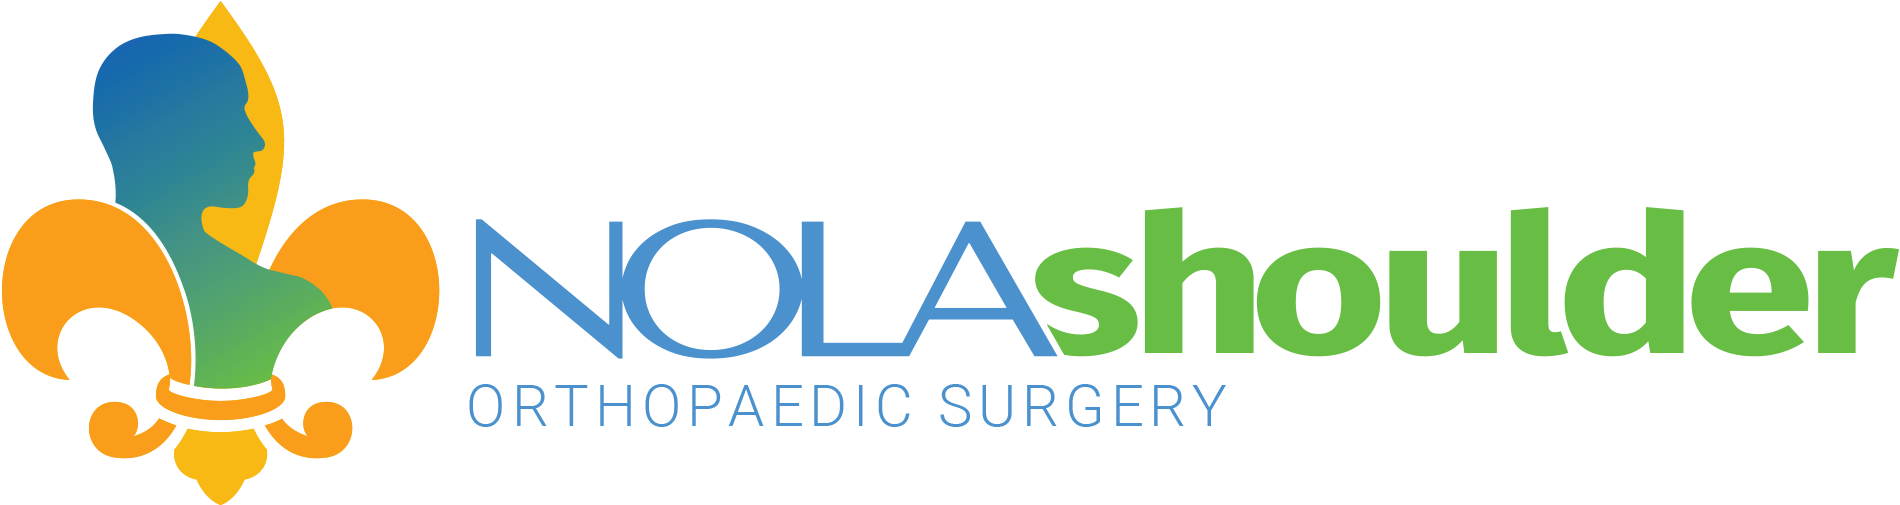 NOLA Shoulder | Dr. Michael J. O’Brien | Orthopaedic Surgery